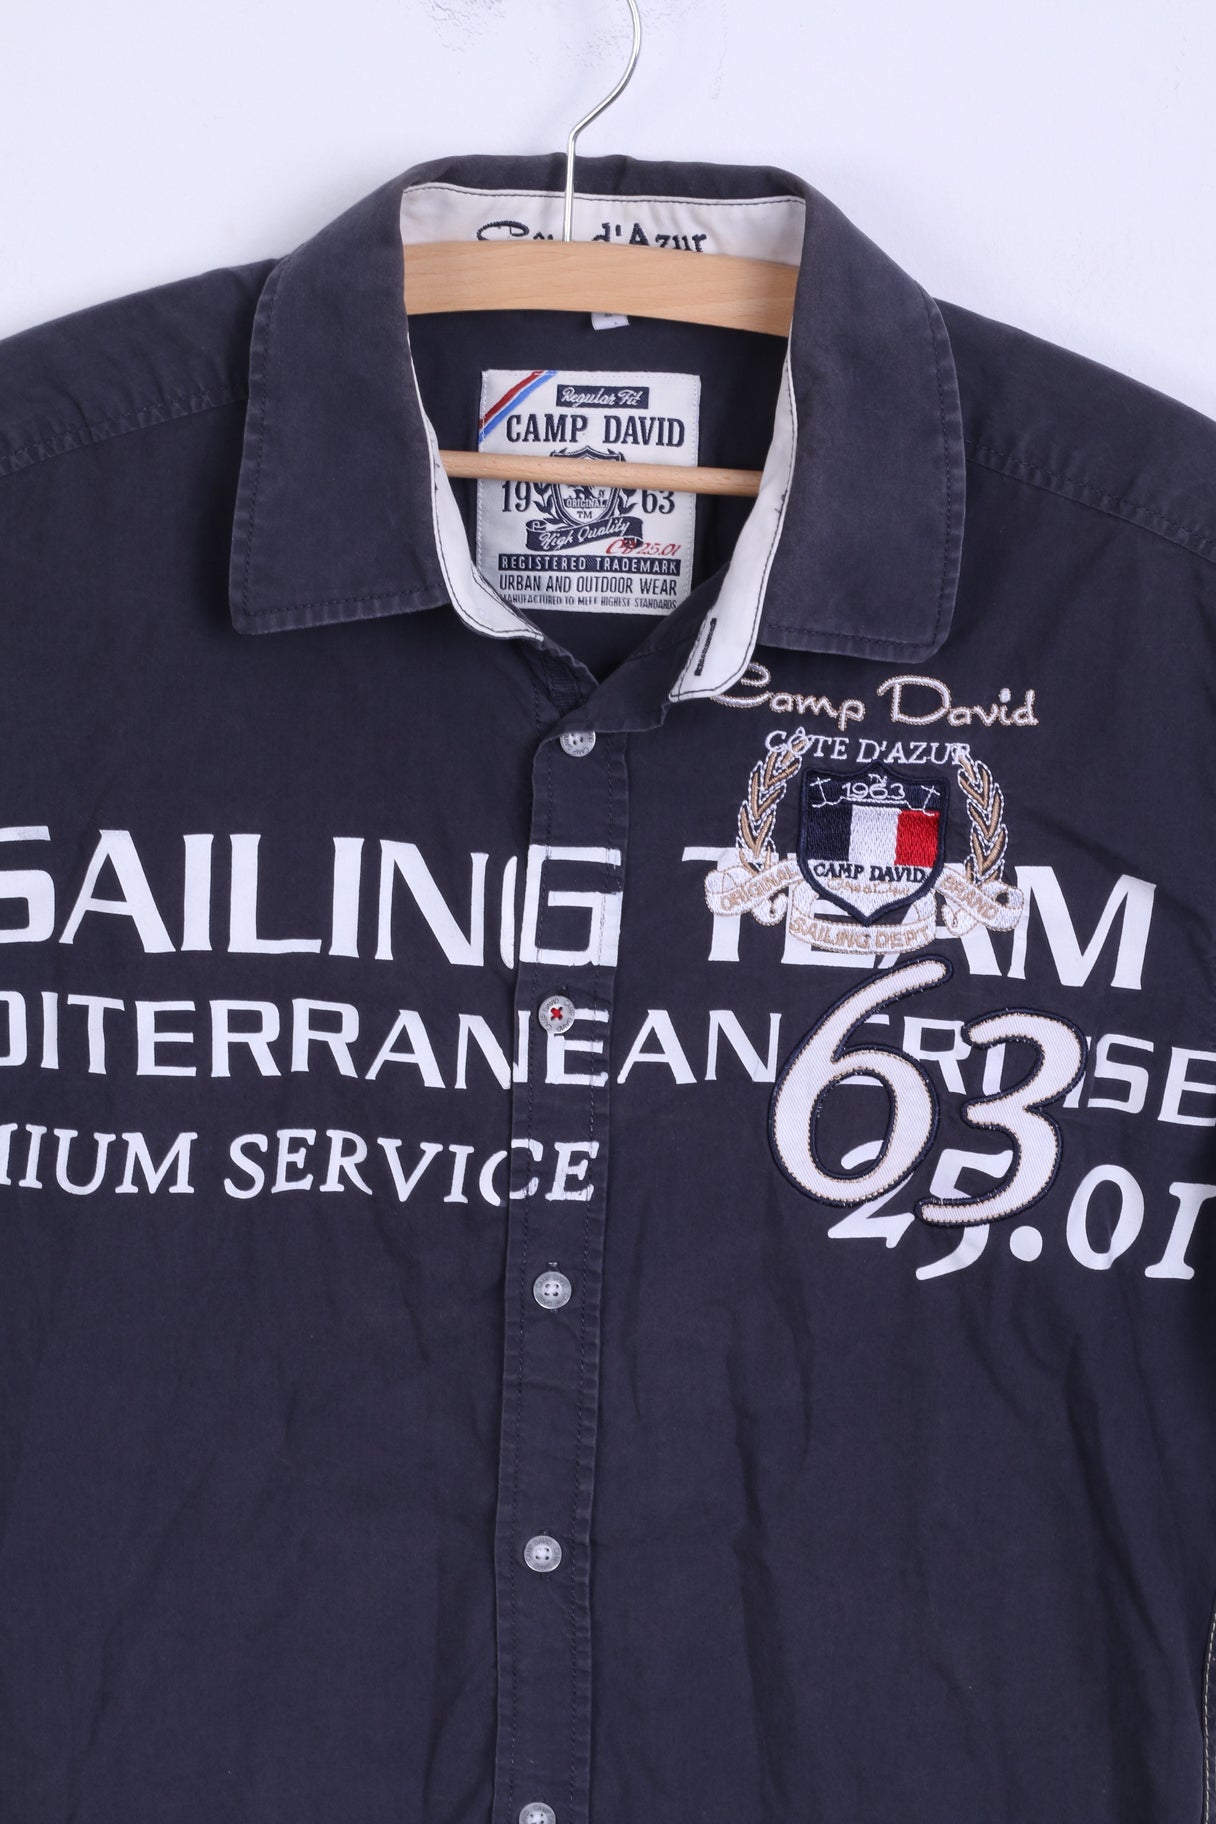 Camp David Mens S Regular Retrospect Grey Embroidered Clothes Fit – Shirt Casual Cotton